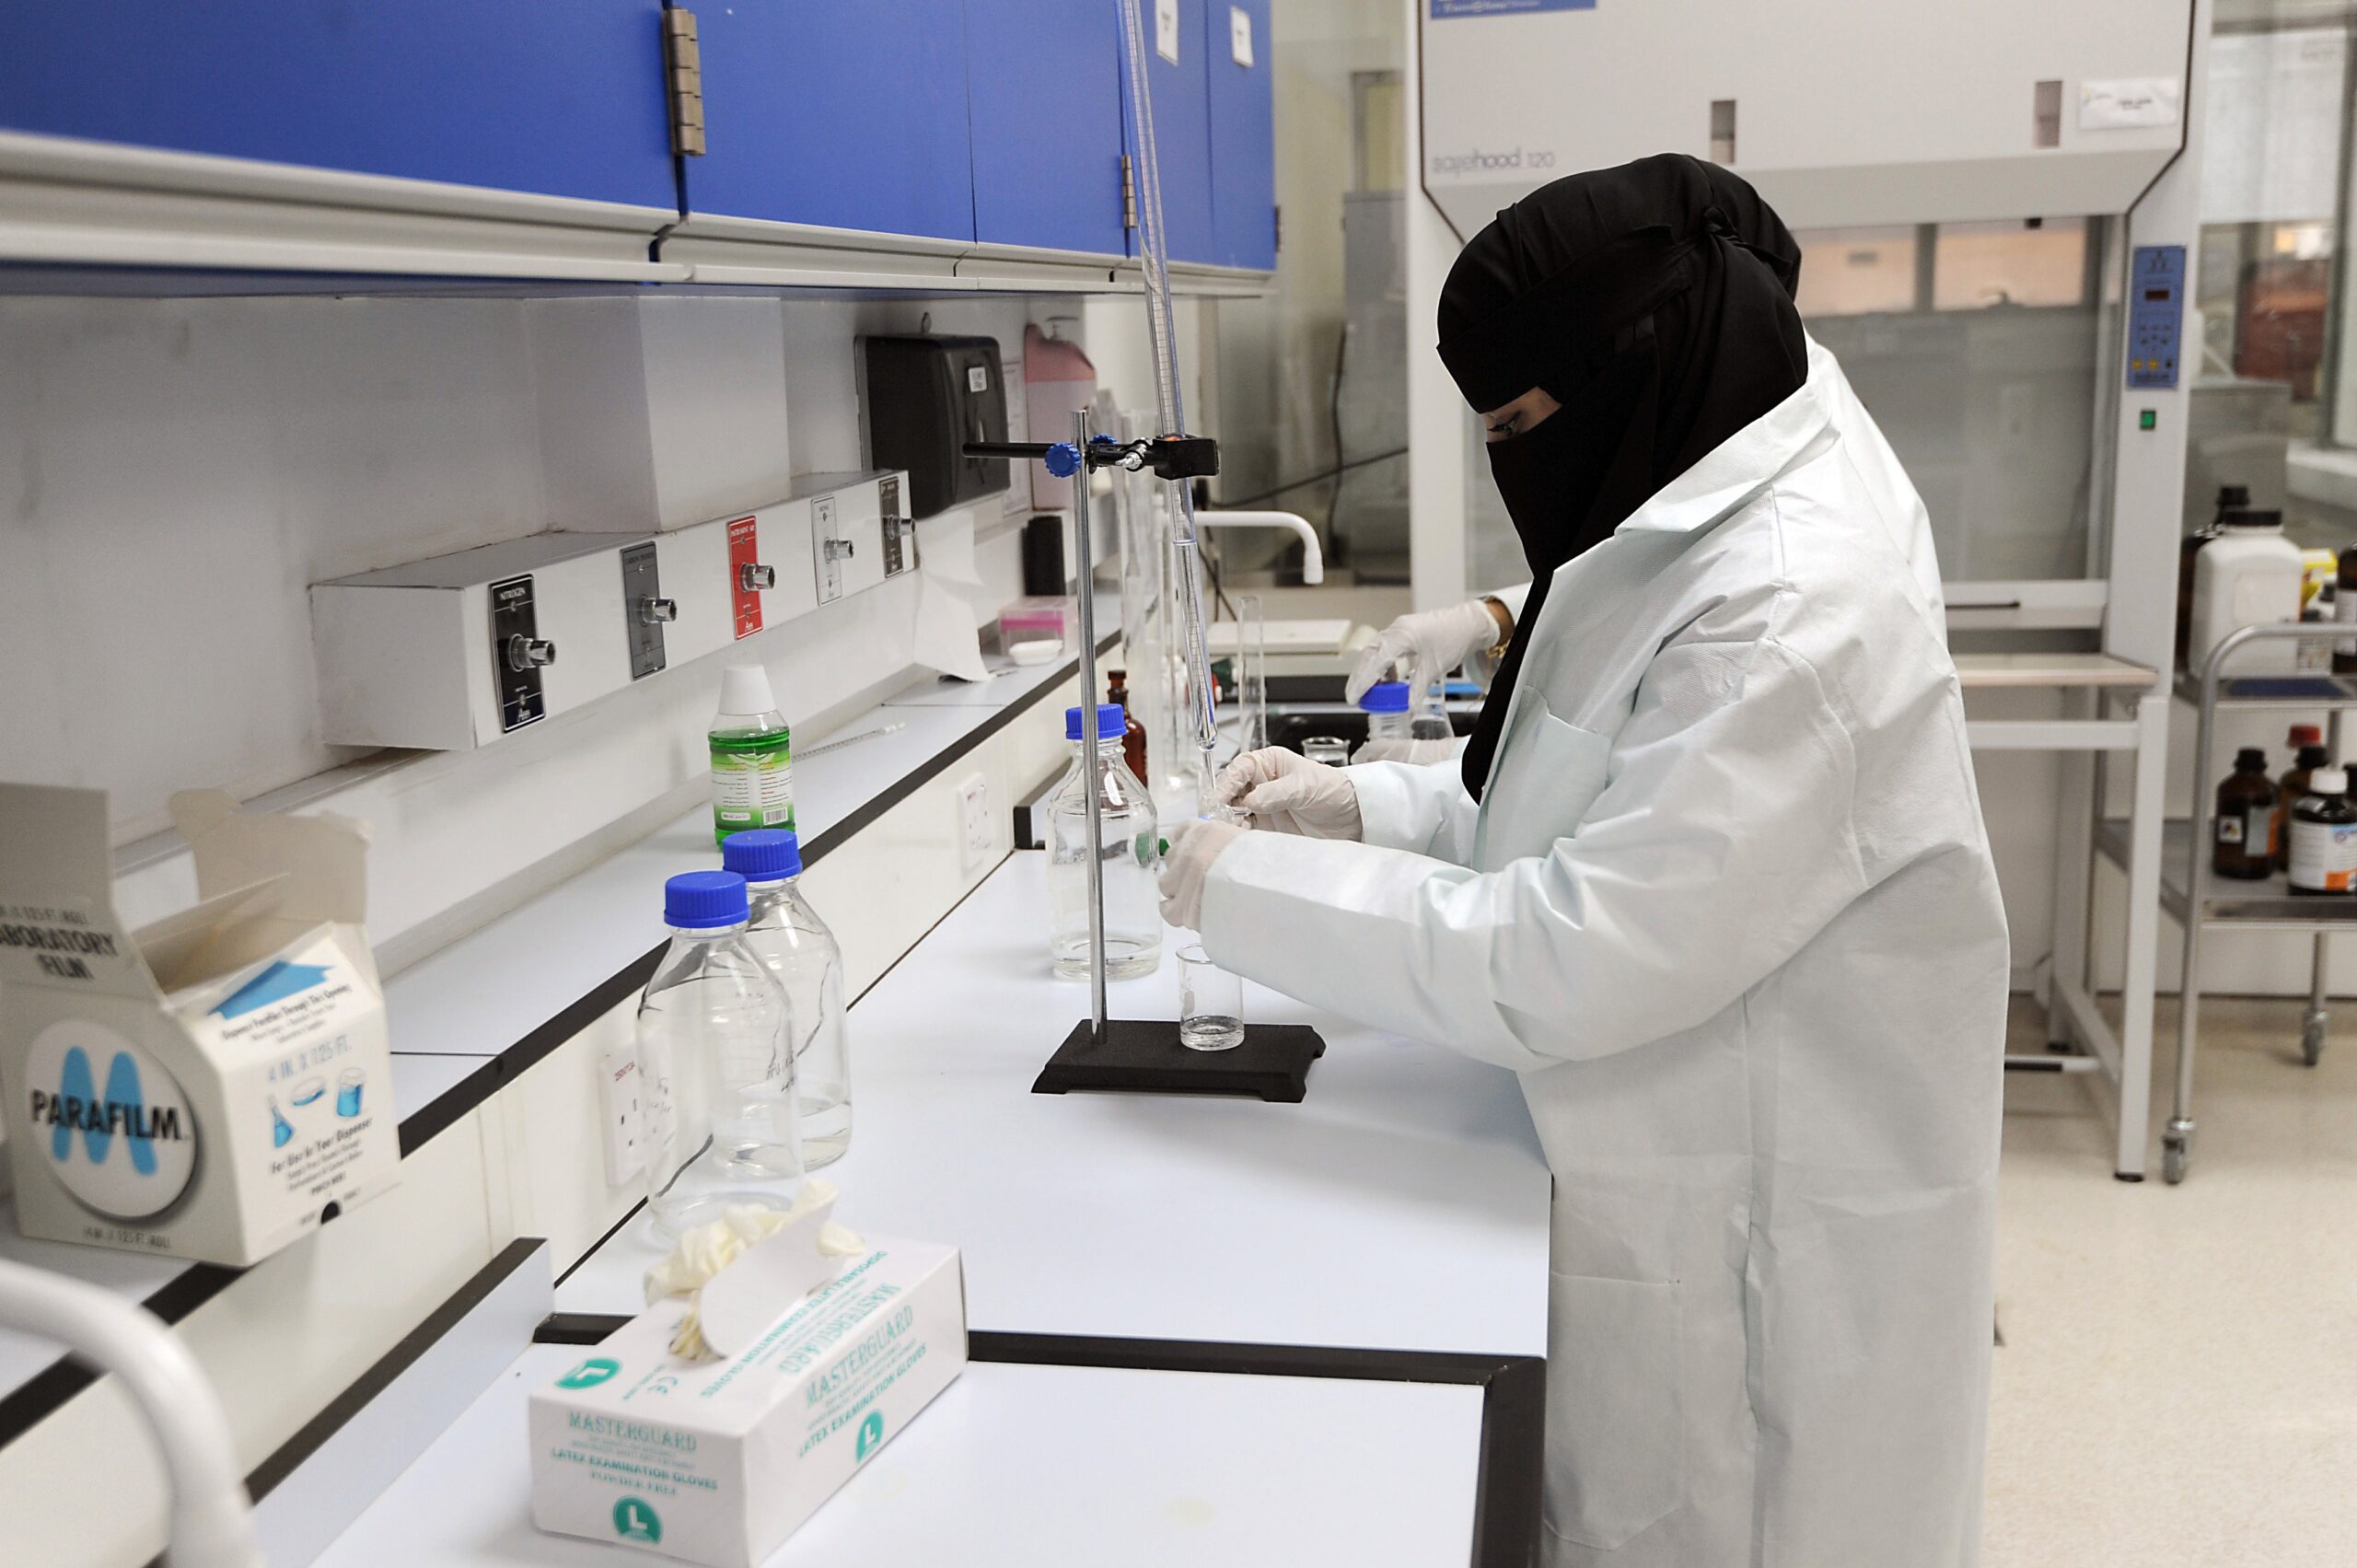 Laboratory in Riyadh, Saudi Arabia on 14 December 2014 [FAYEZ NURELDINE/AFP/Getty Images]